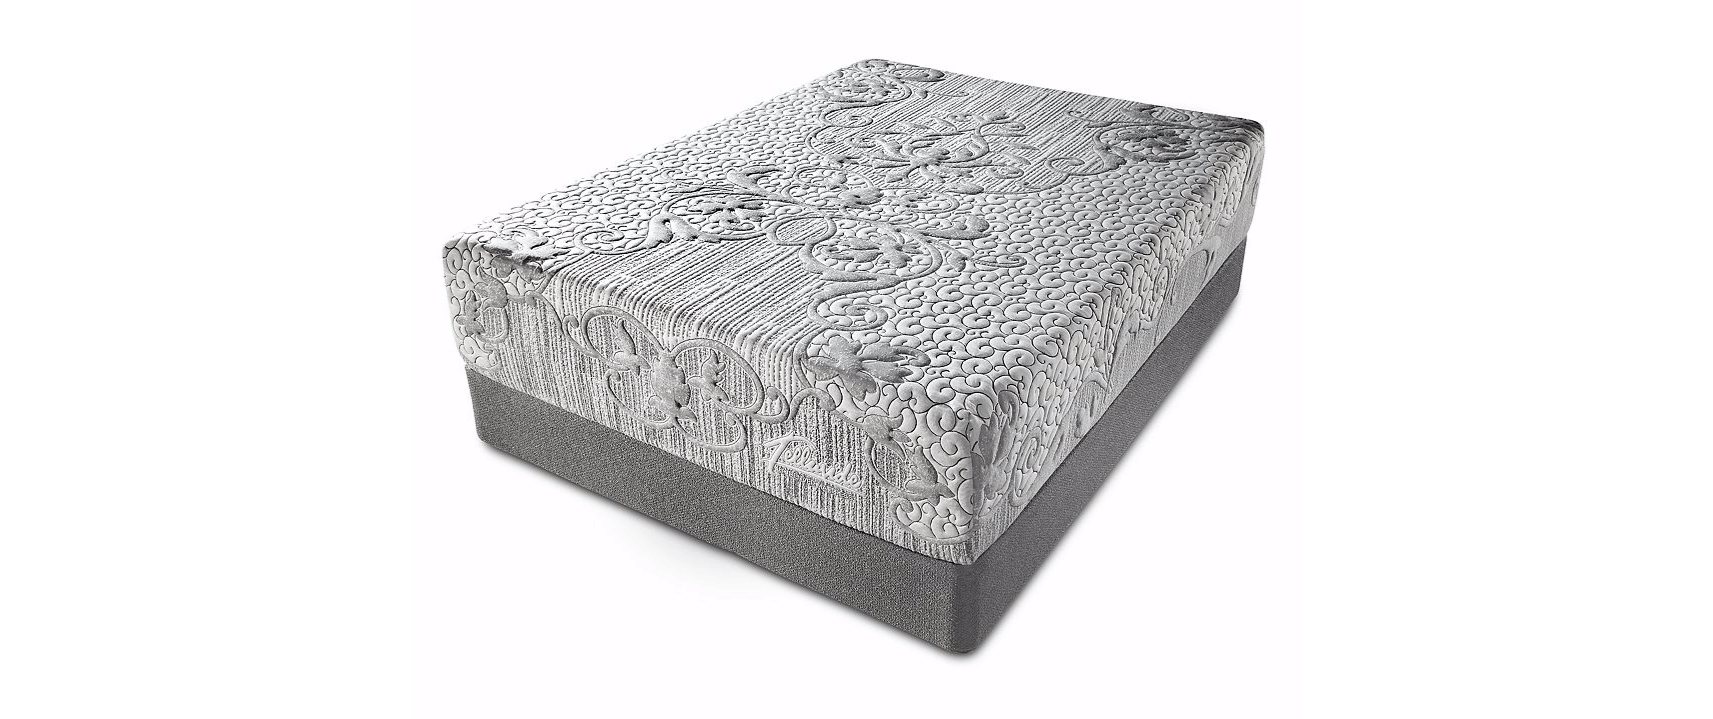 telluride plush mattress review